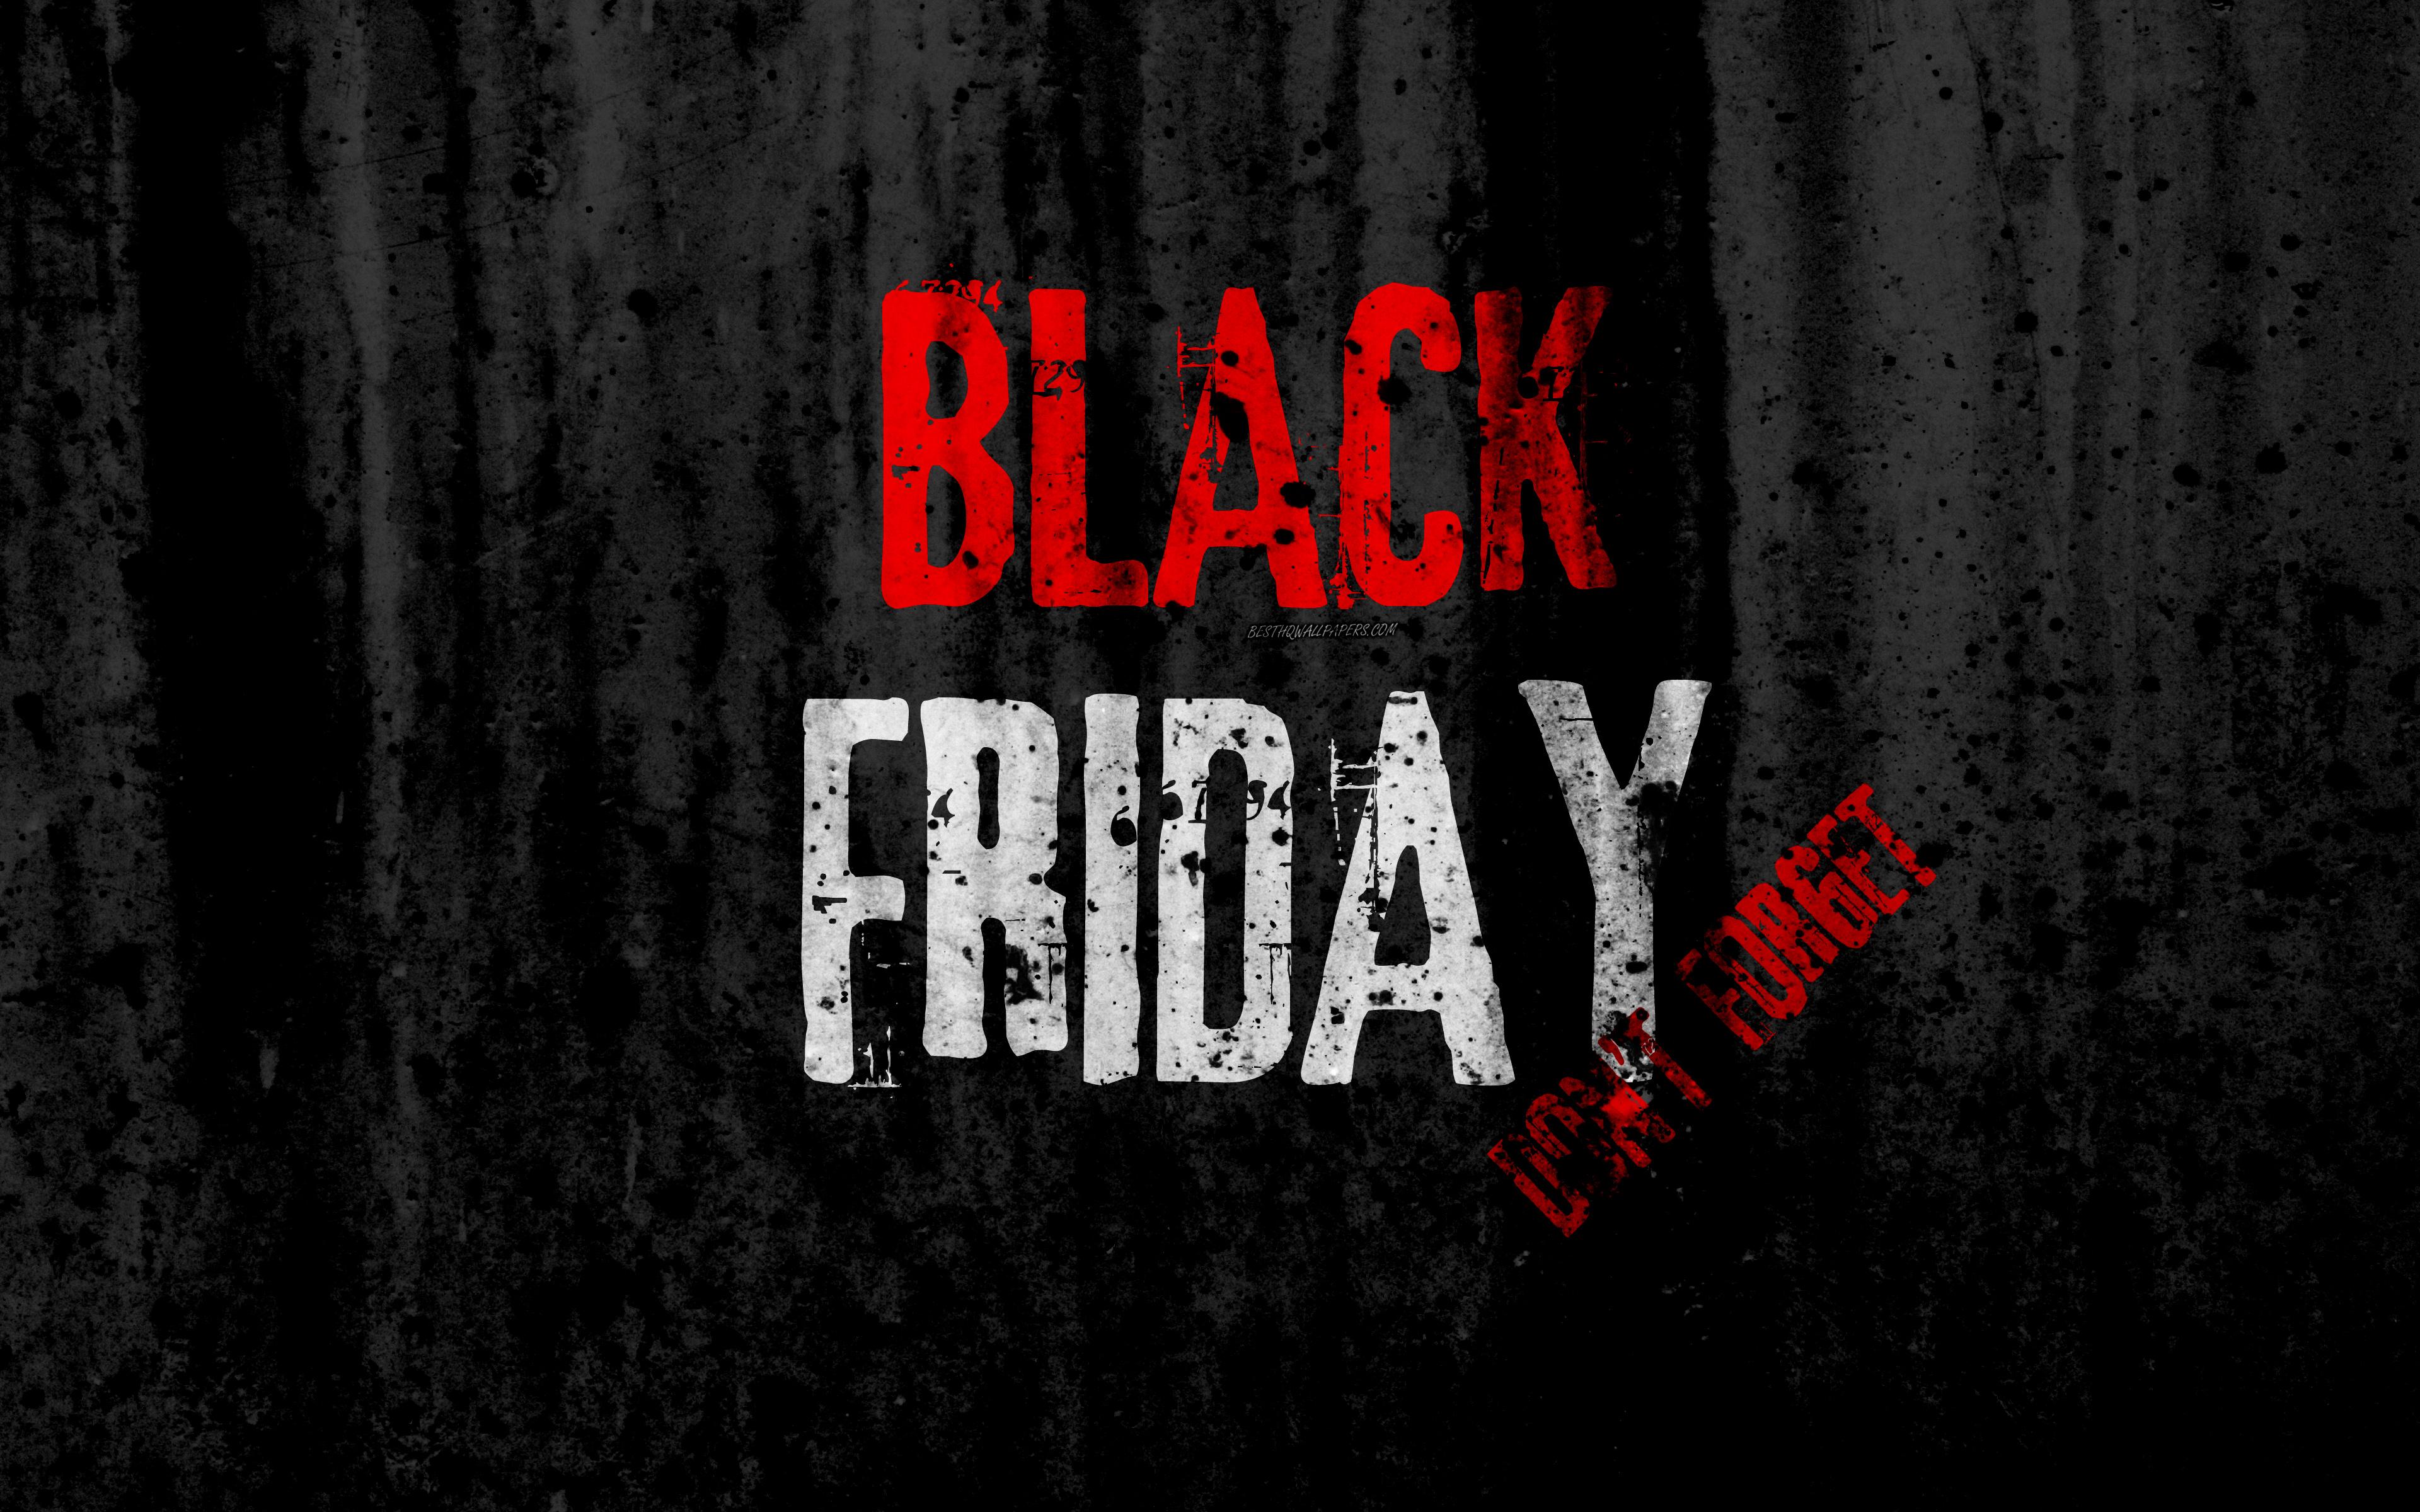 Black Friday Wallpaper Images  Free Download on Freepik